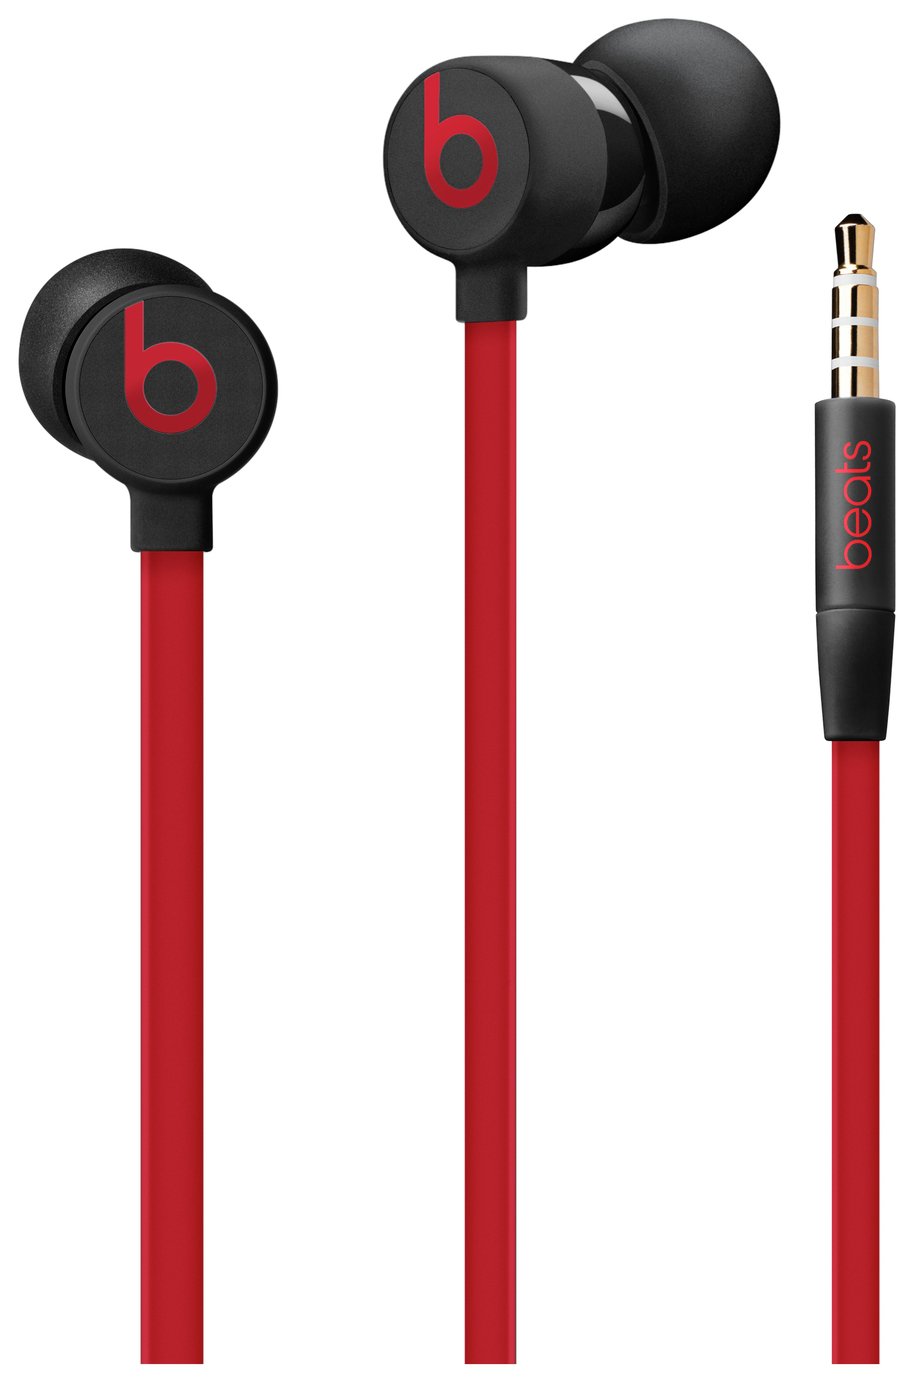 urBeats3 In-Ear Earphones with 3.5mm Plug - Black / Red